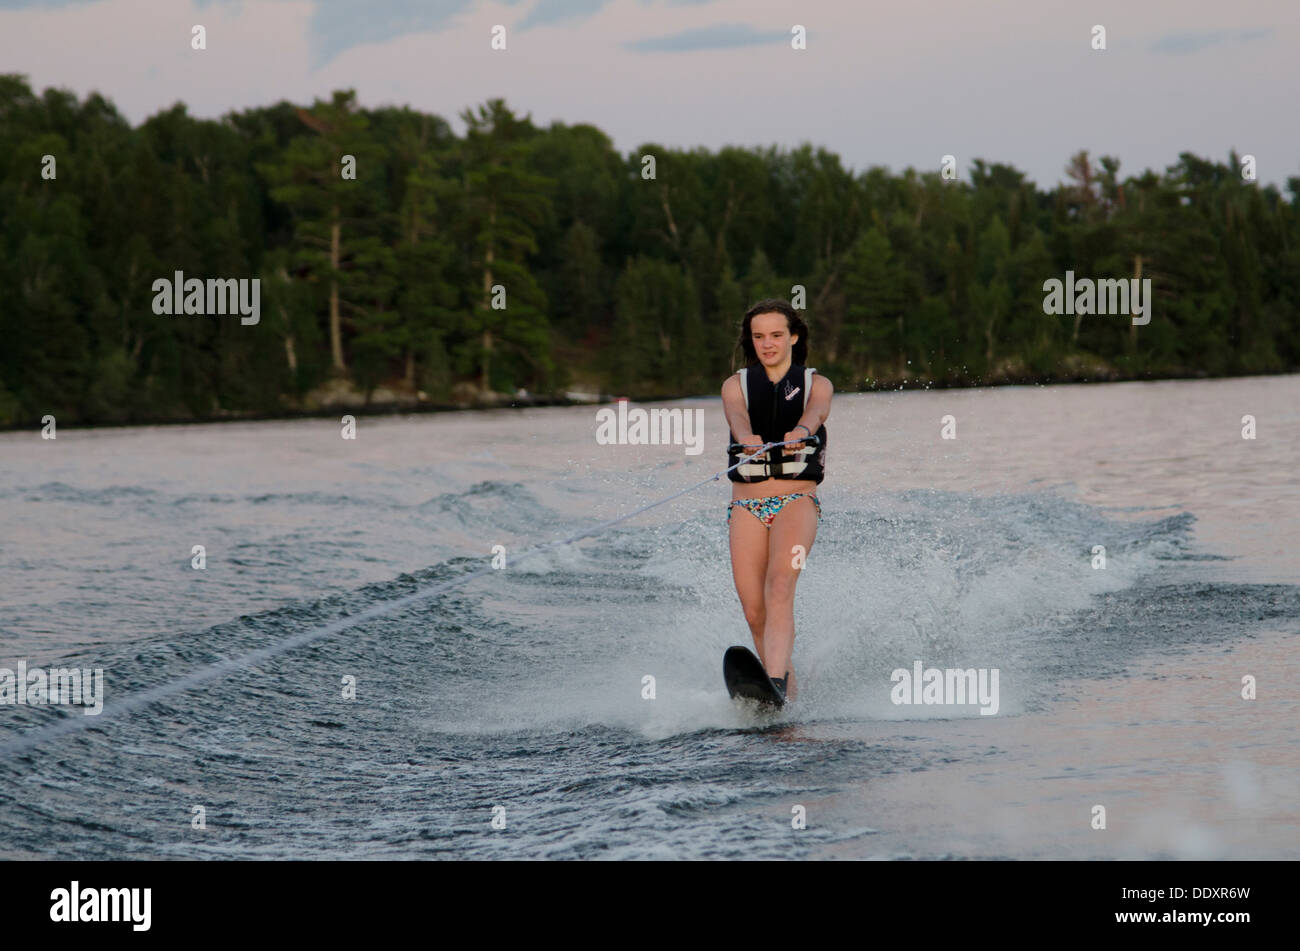 Girl water skiing in a lake, Lake of The Woods, Keewatin, Ontario, Canada Stock Photo